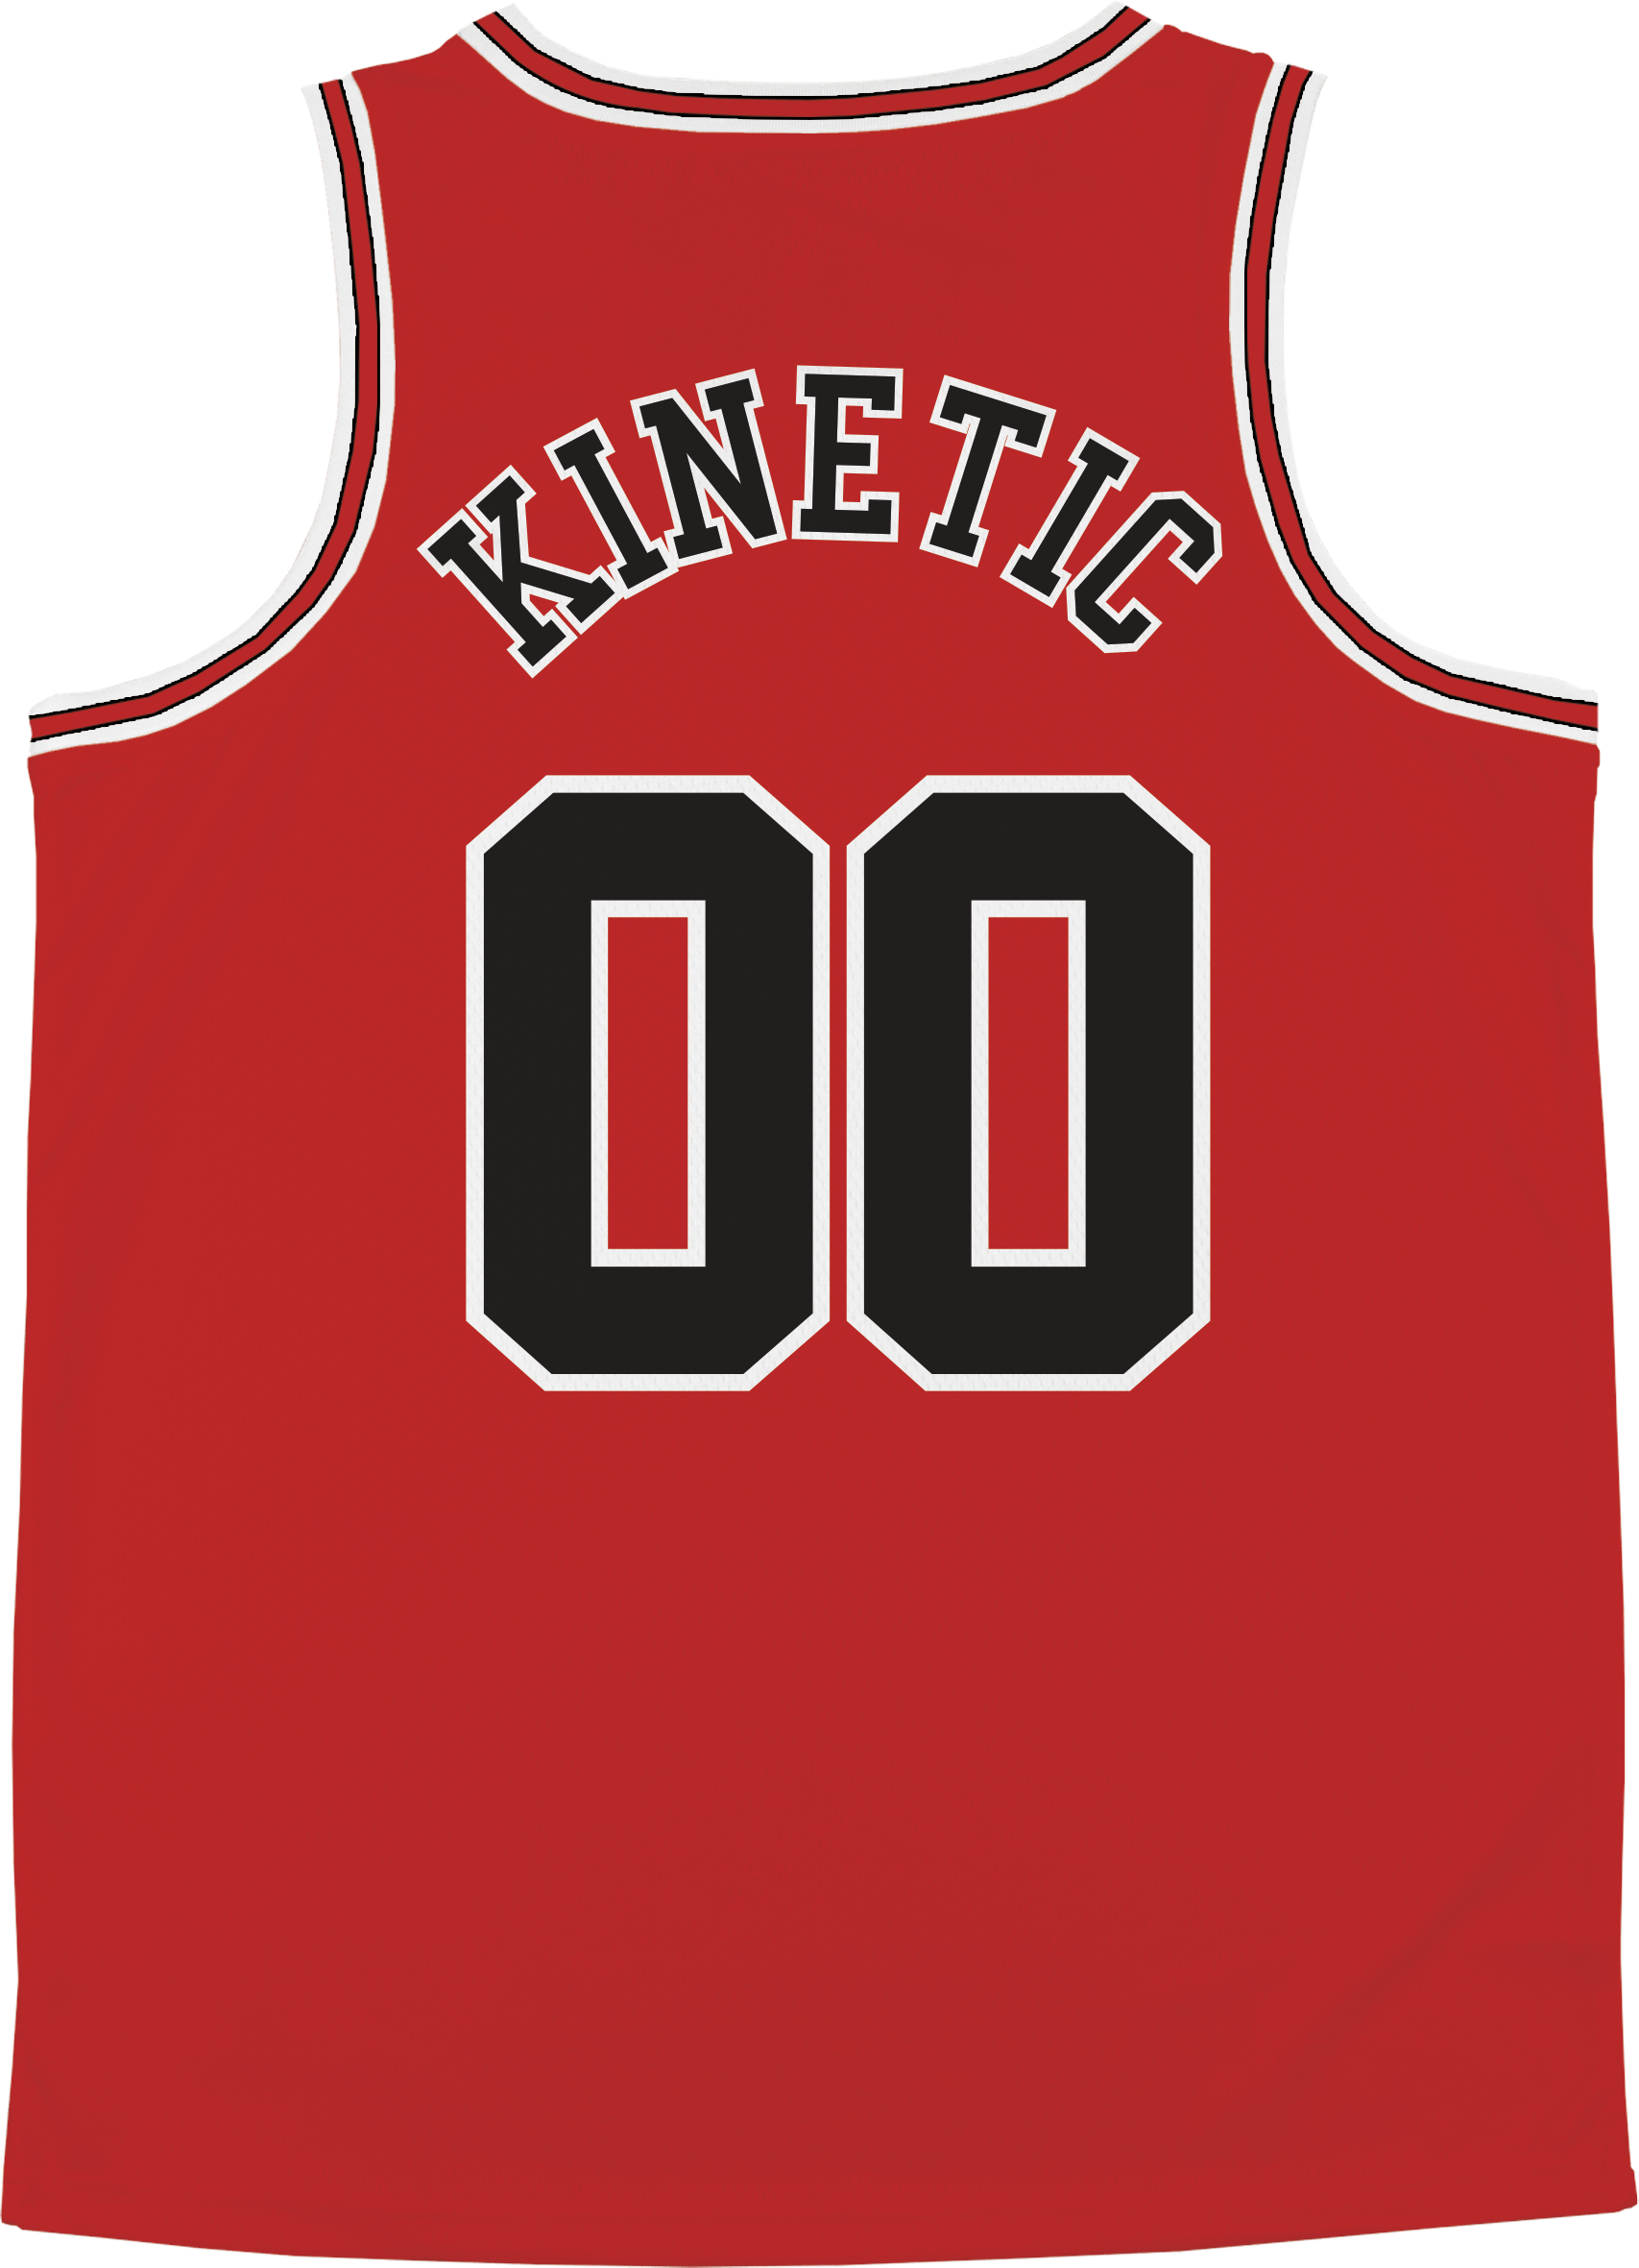 Zeta Psi - Big Red Basketball Jersey - Kinetic Society